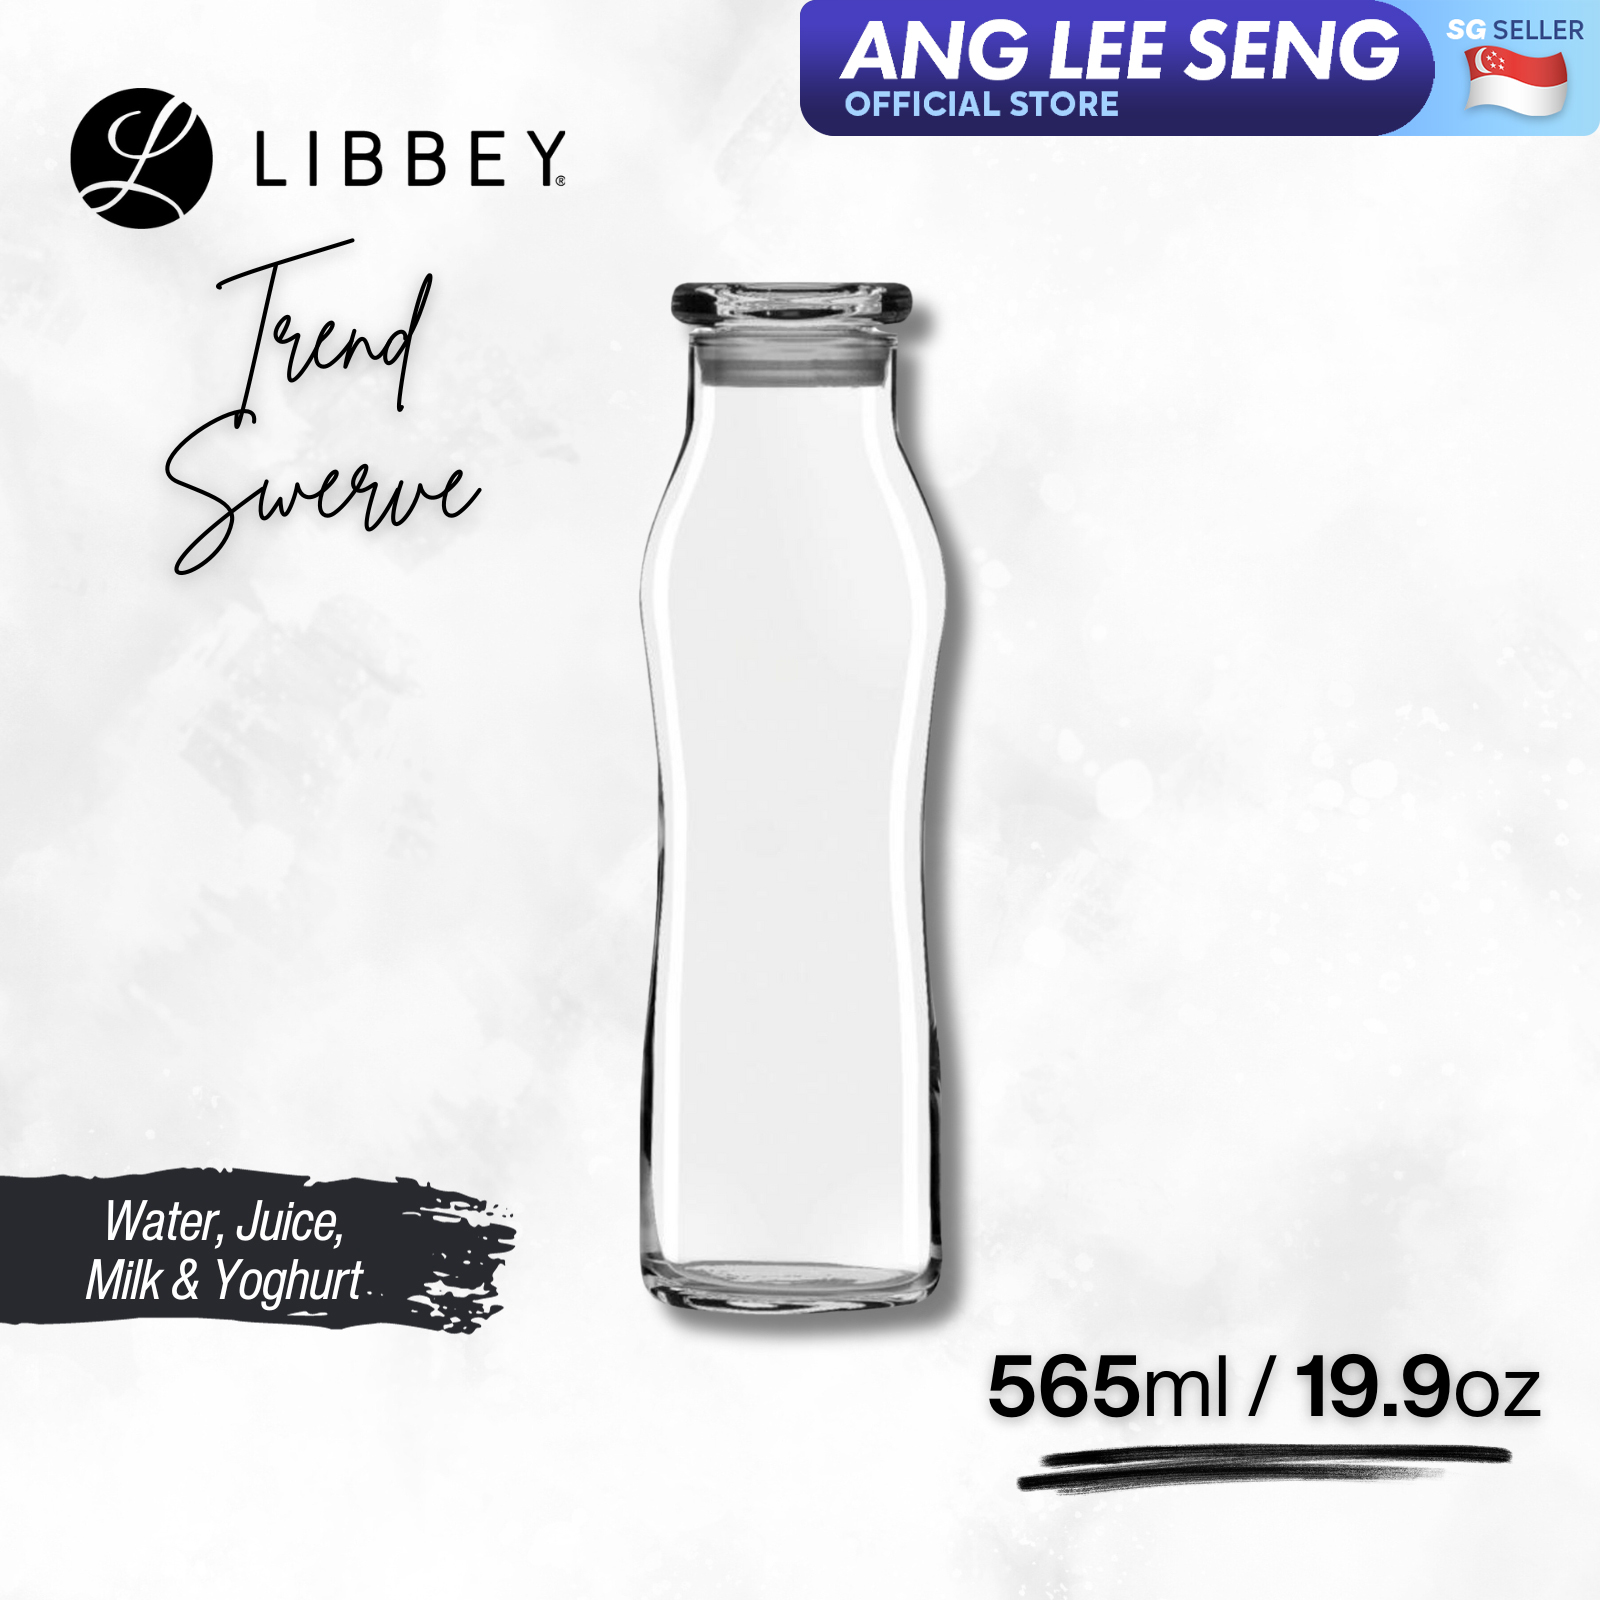 Libbey Trend Swerve Glass Carafe Water Juice Milk Yoghurt Bottle 565ml/19.9oz